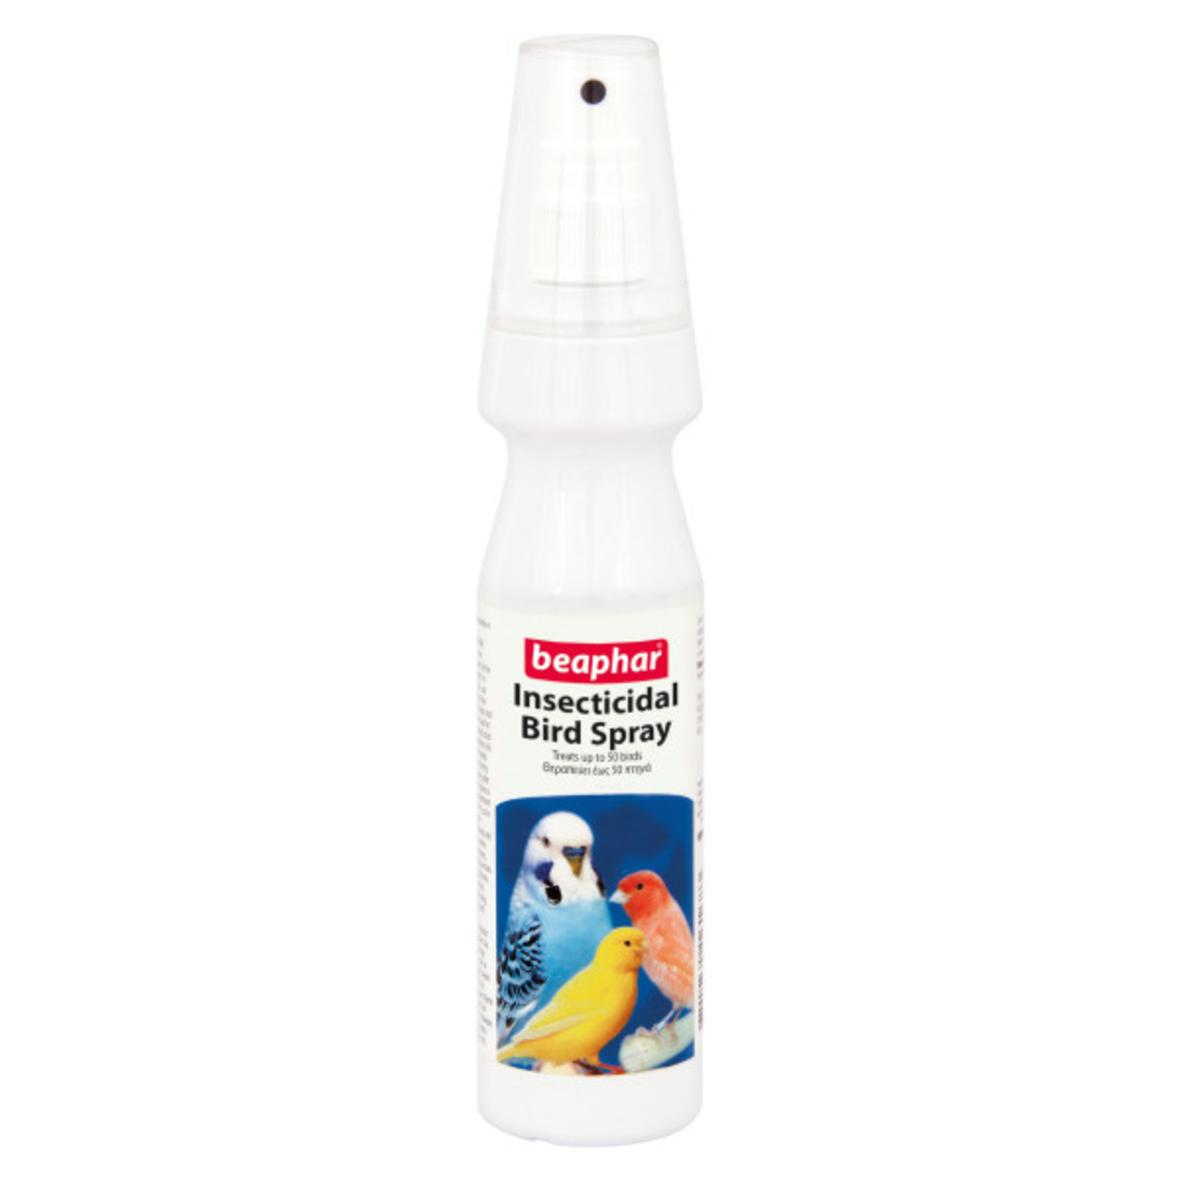 BEAPHAR Insecticidal Bird Spray 150ml